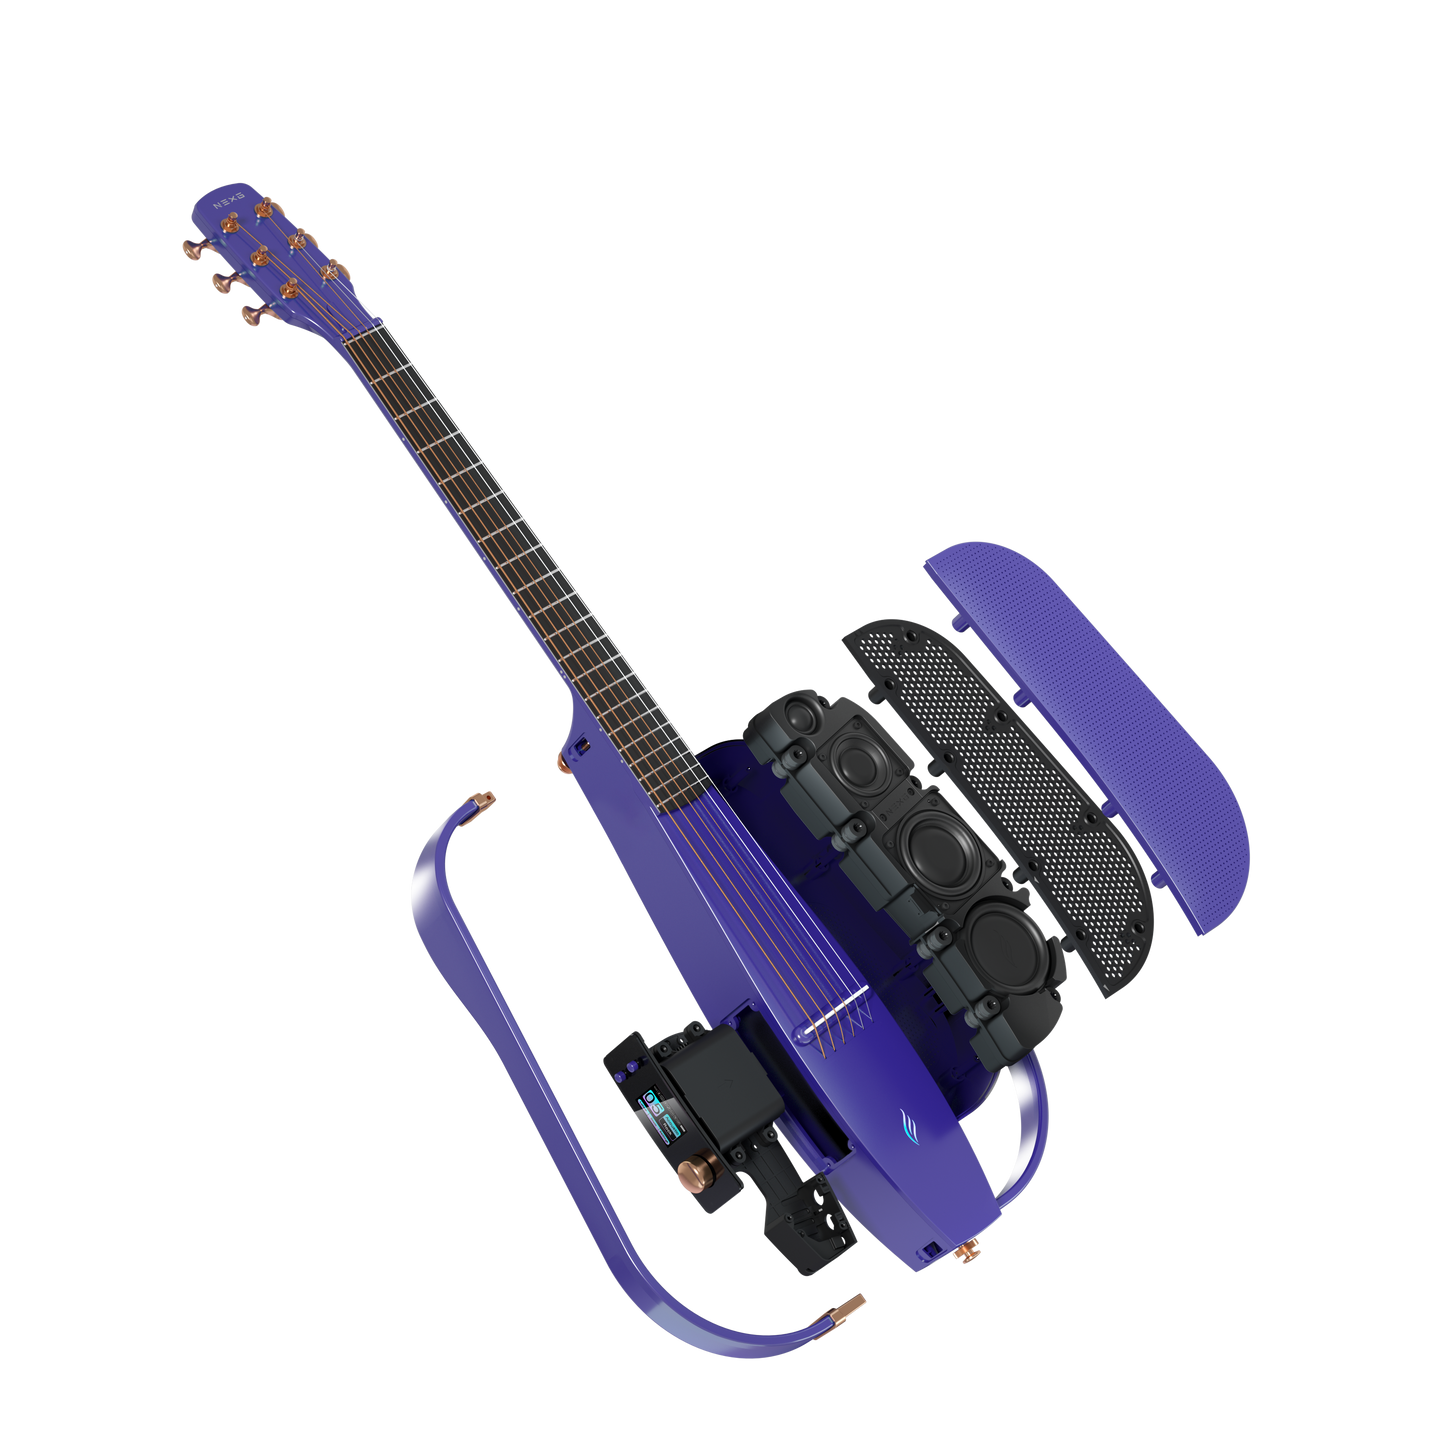 ENYA NEXG 2 Carbon Fiber Guitar Purple (Basic)